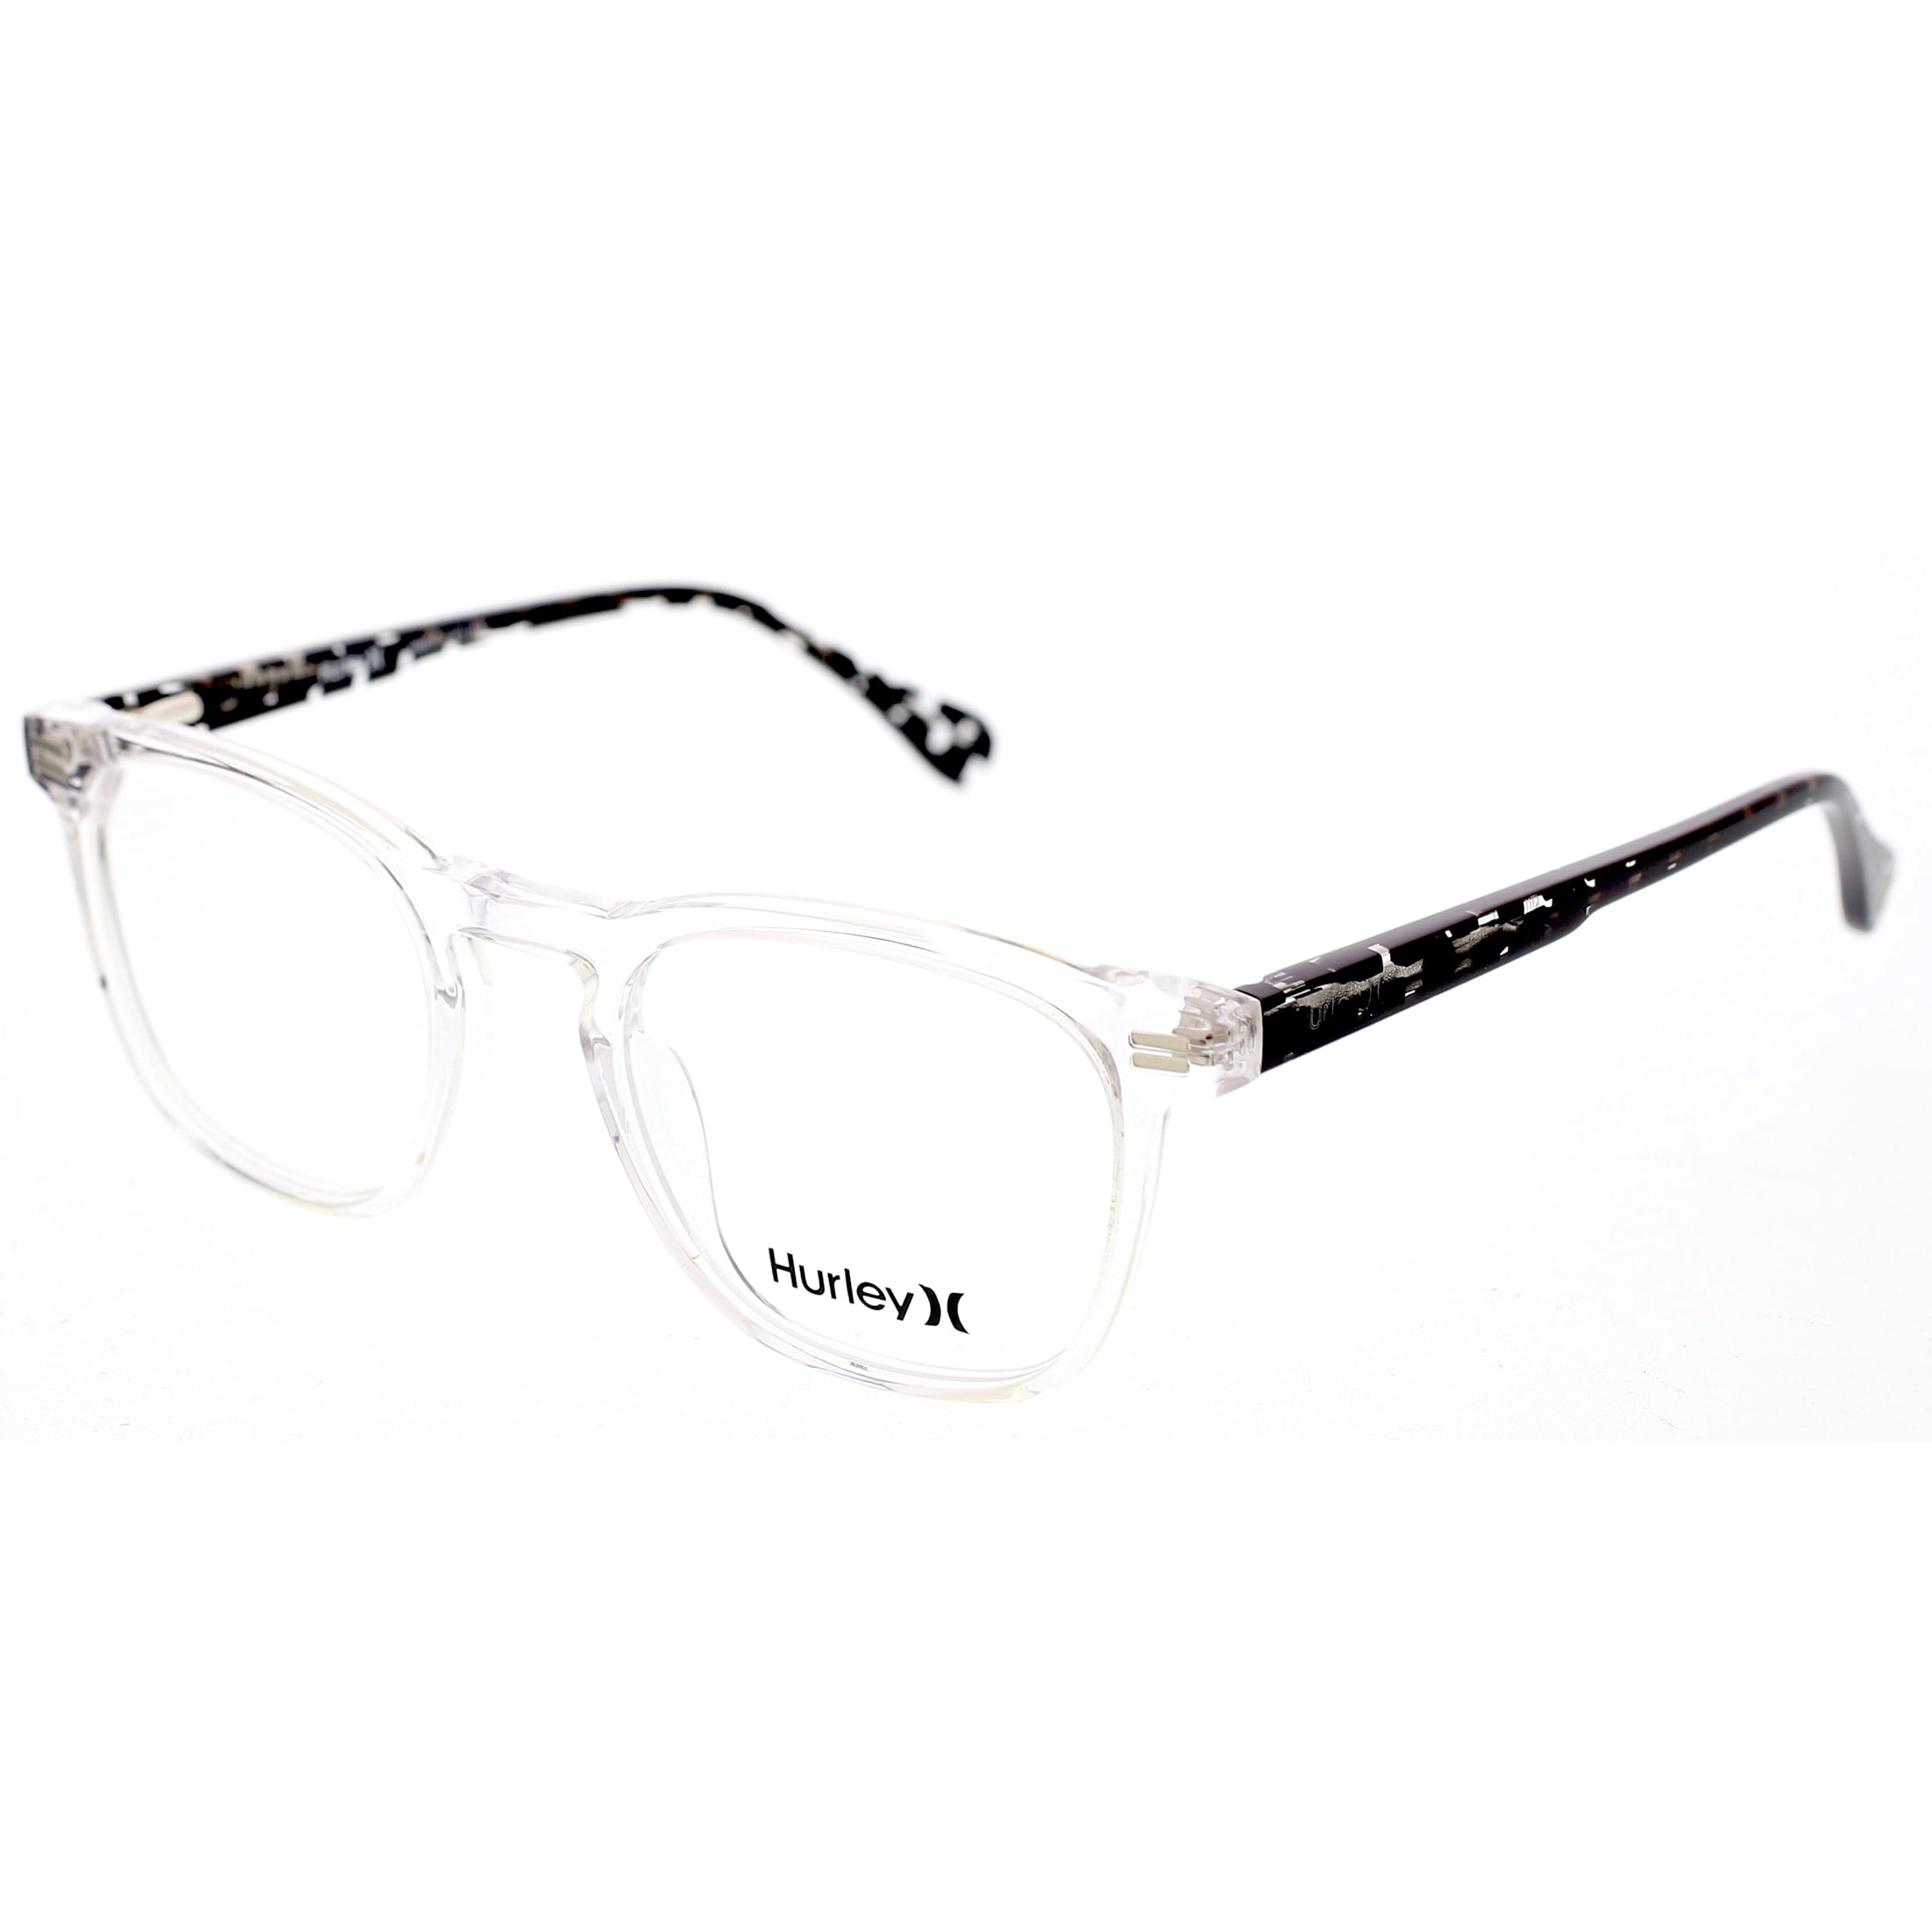 Hurley Men's Square Eyeglasses, Hmo113 Philadelphia, Crystal, 50-21-145, with Case